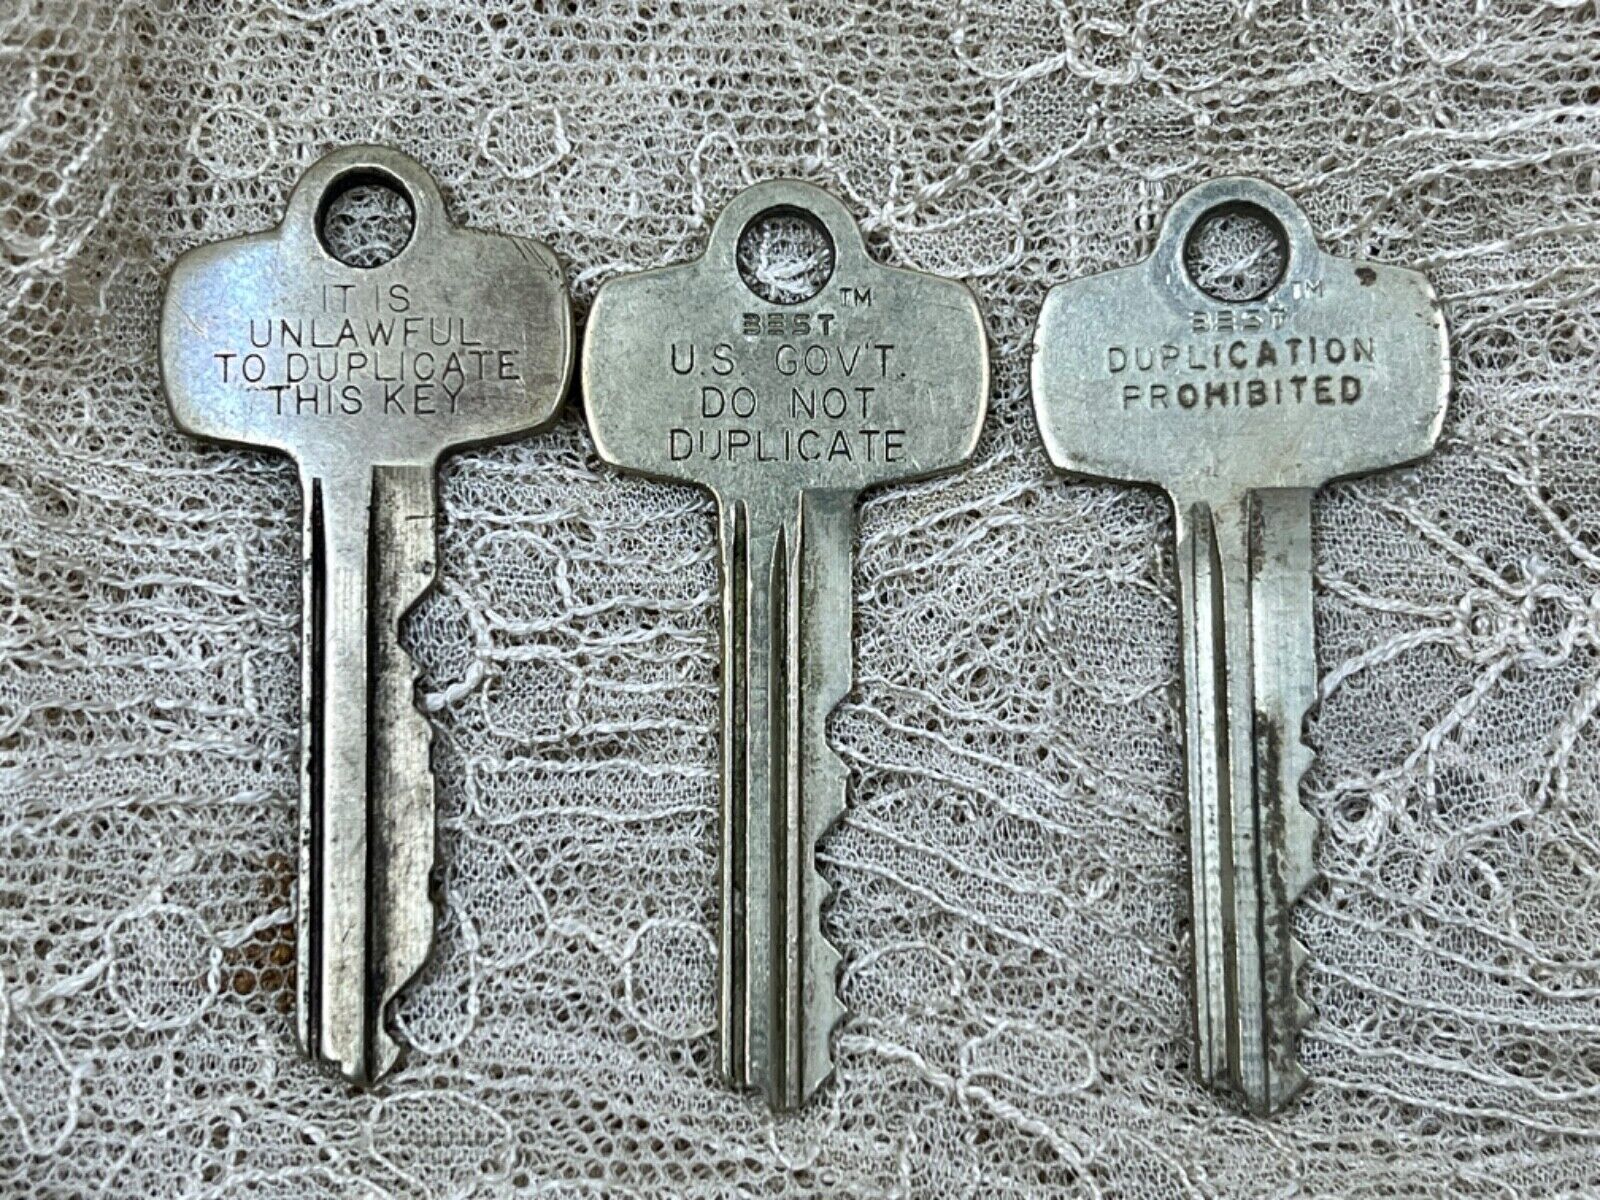 3 Vintage Collectible Keys, 1- U.S. Gov't Do Not Duplicate Key, 2 No Duplication